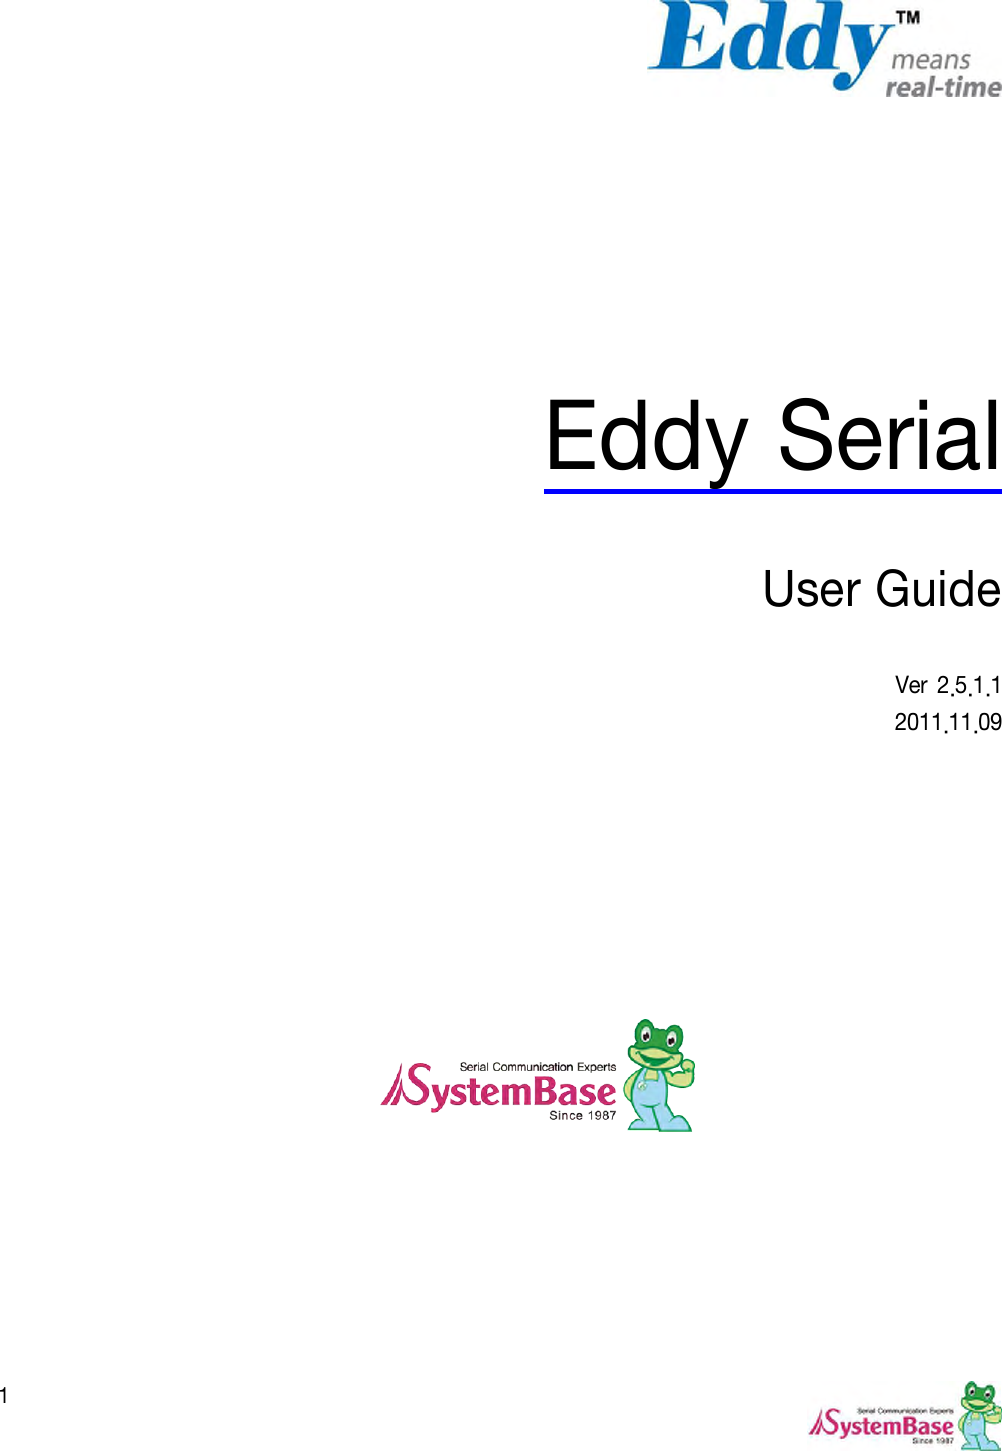  1         Eddy Serial  User Guide  Ver  2.5.1.1 2011.11.09         